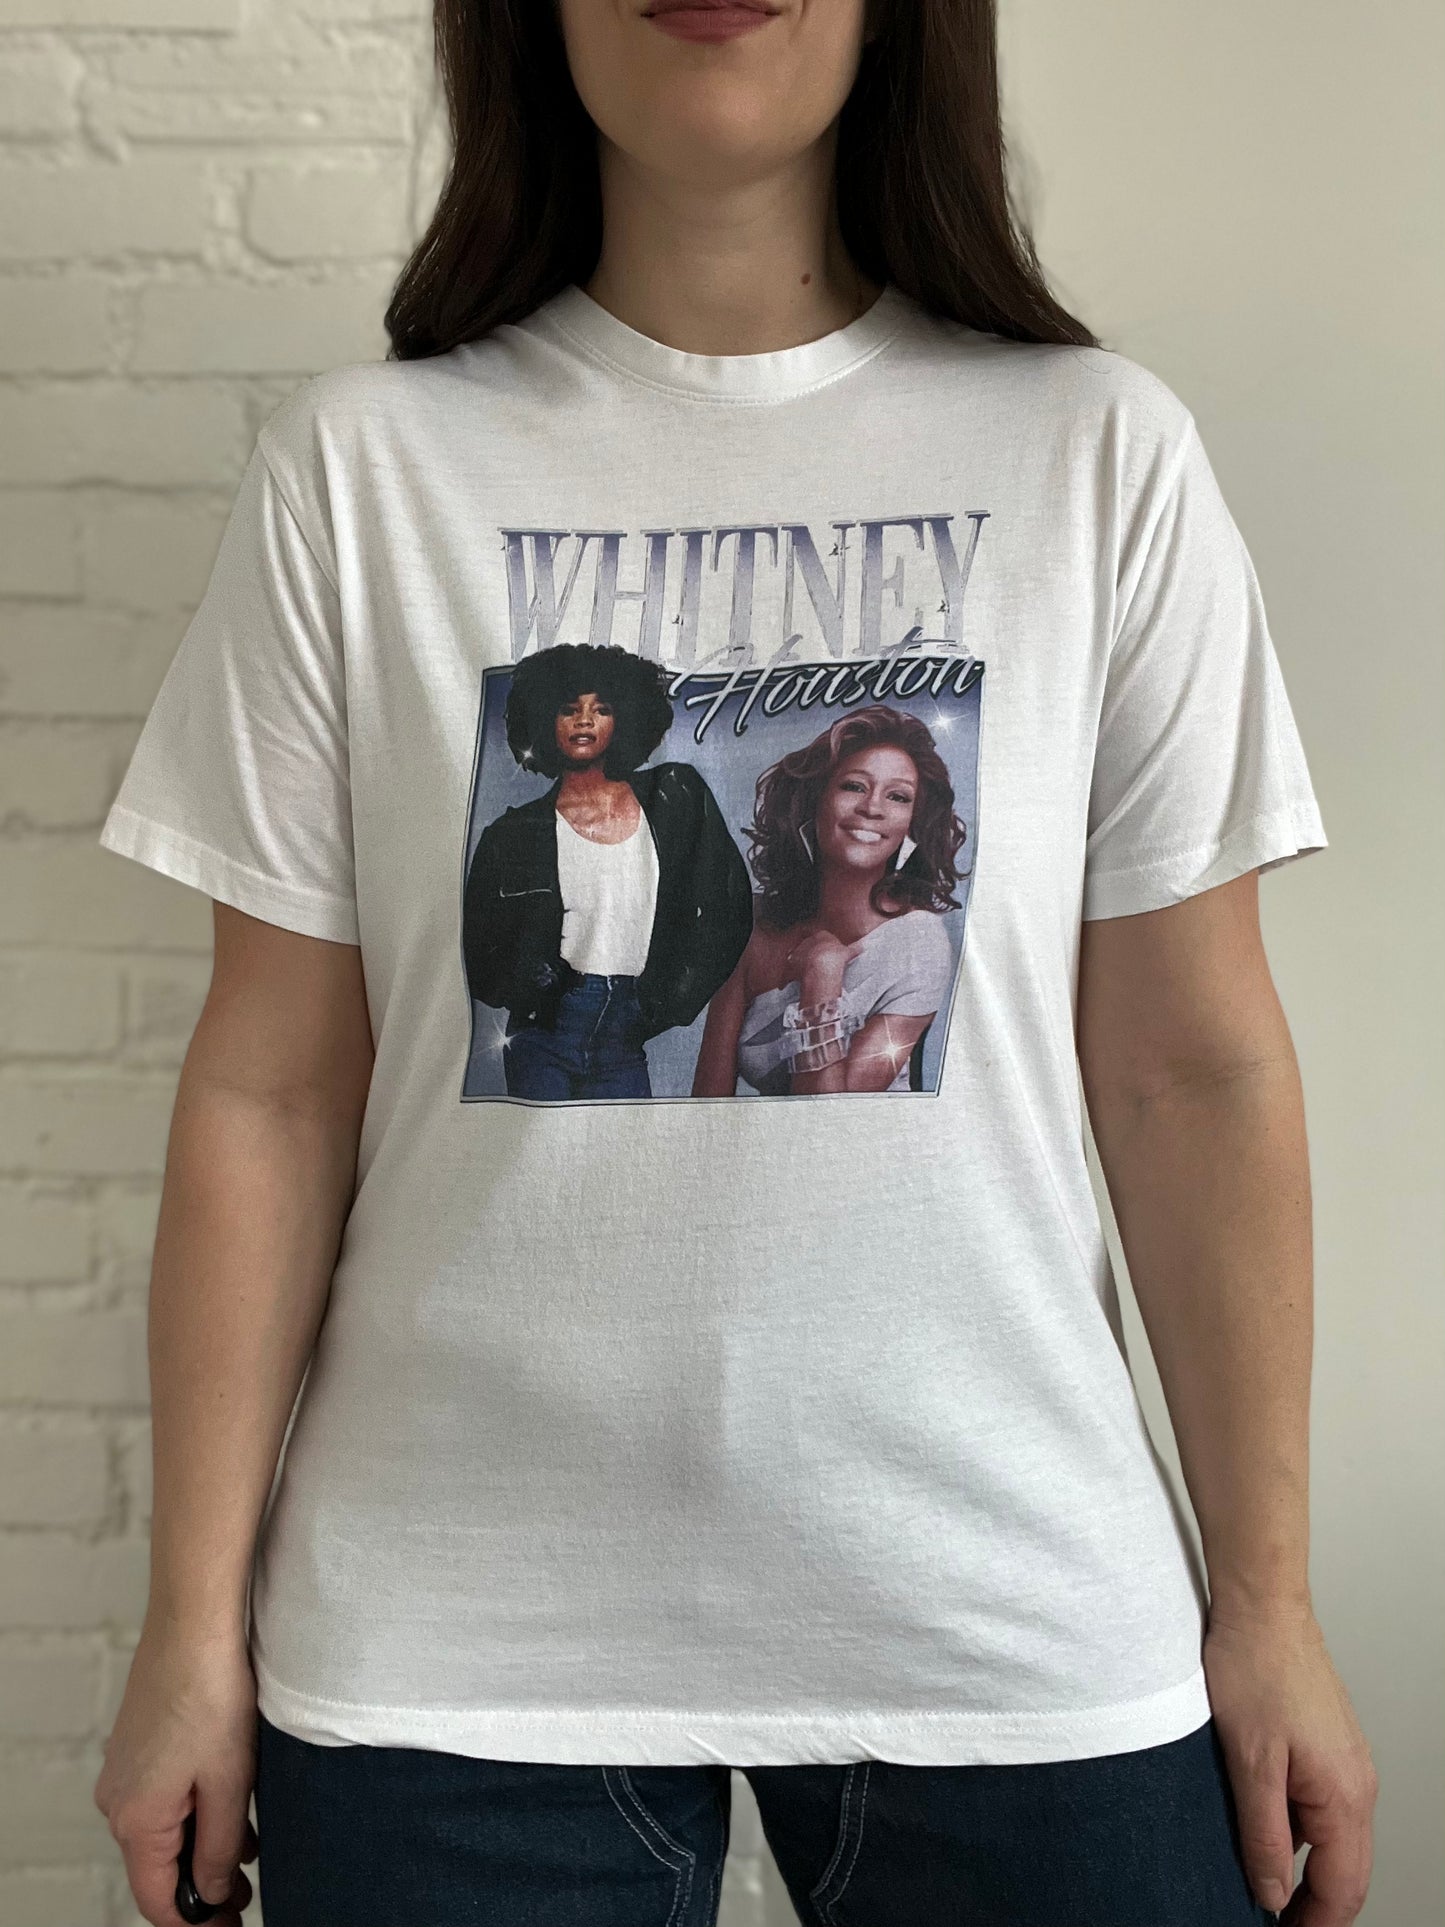 Whitney Houston Glamour T-shirt - Mens M